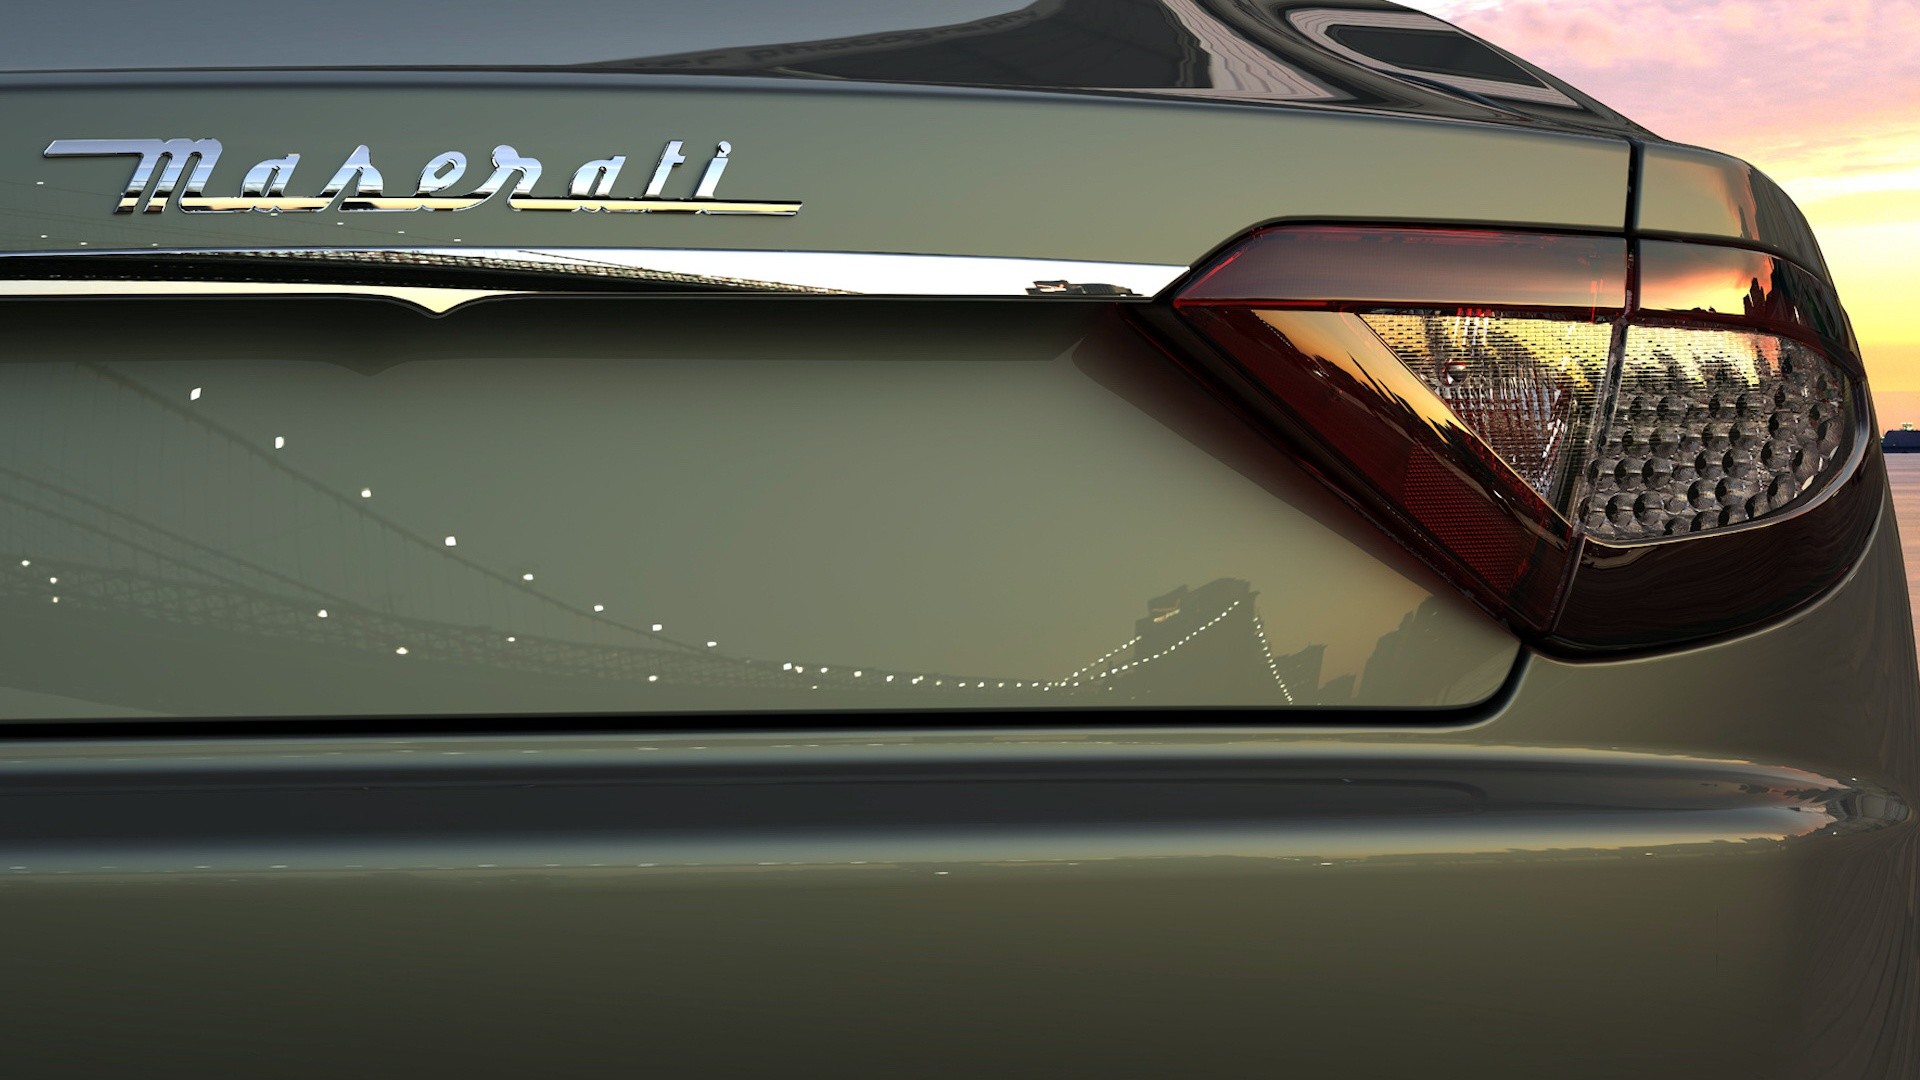 1920x1080 ... Maserati luxury sports cars, hd wallpapers ...